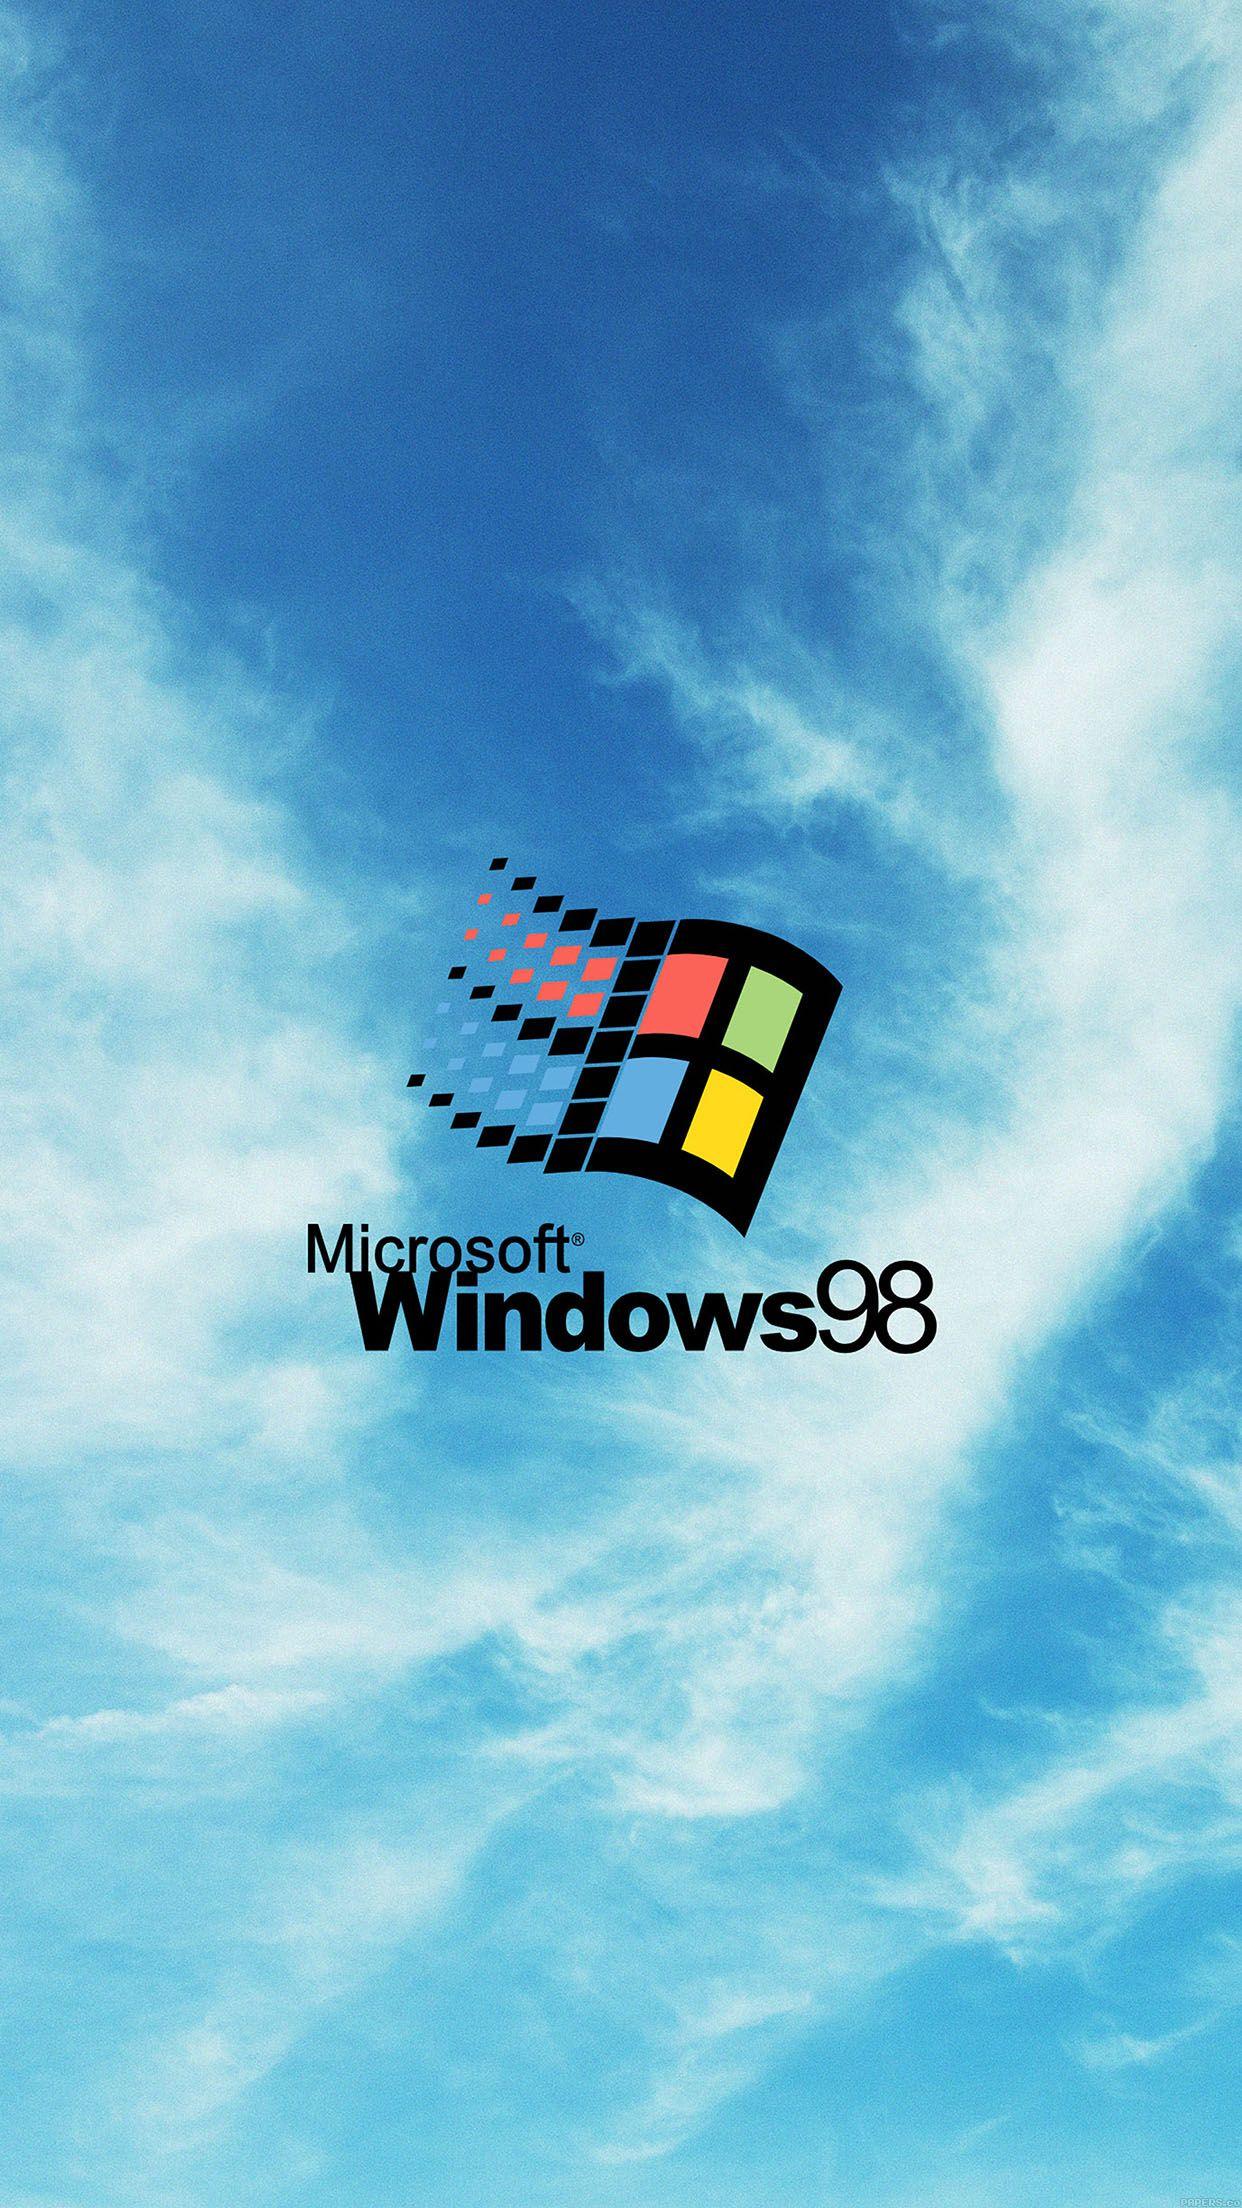 Windows 98 Plus Logo - iPhone 6 Wallpaper windows 98 logo